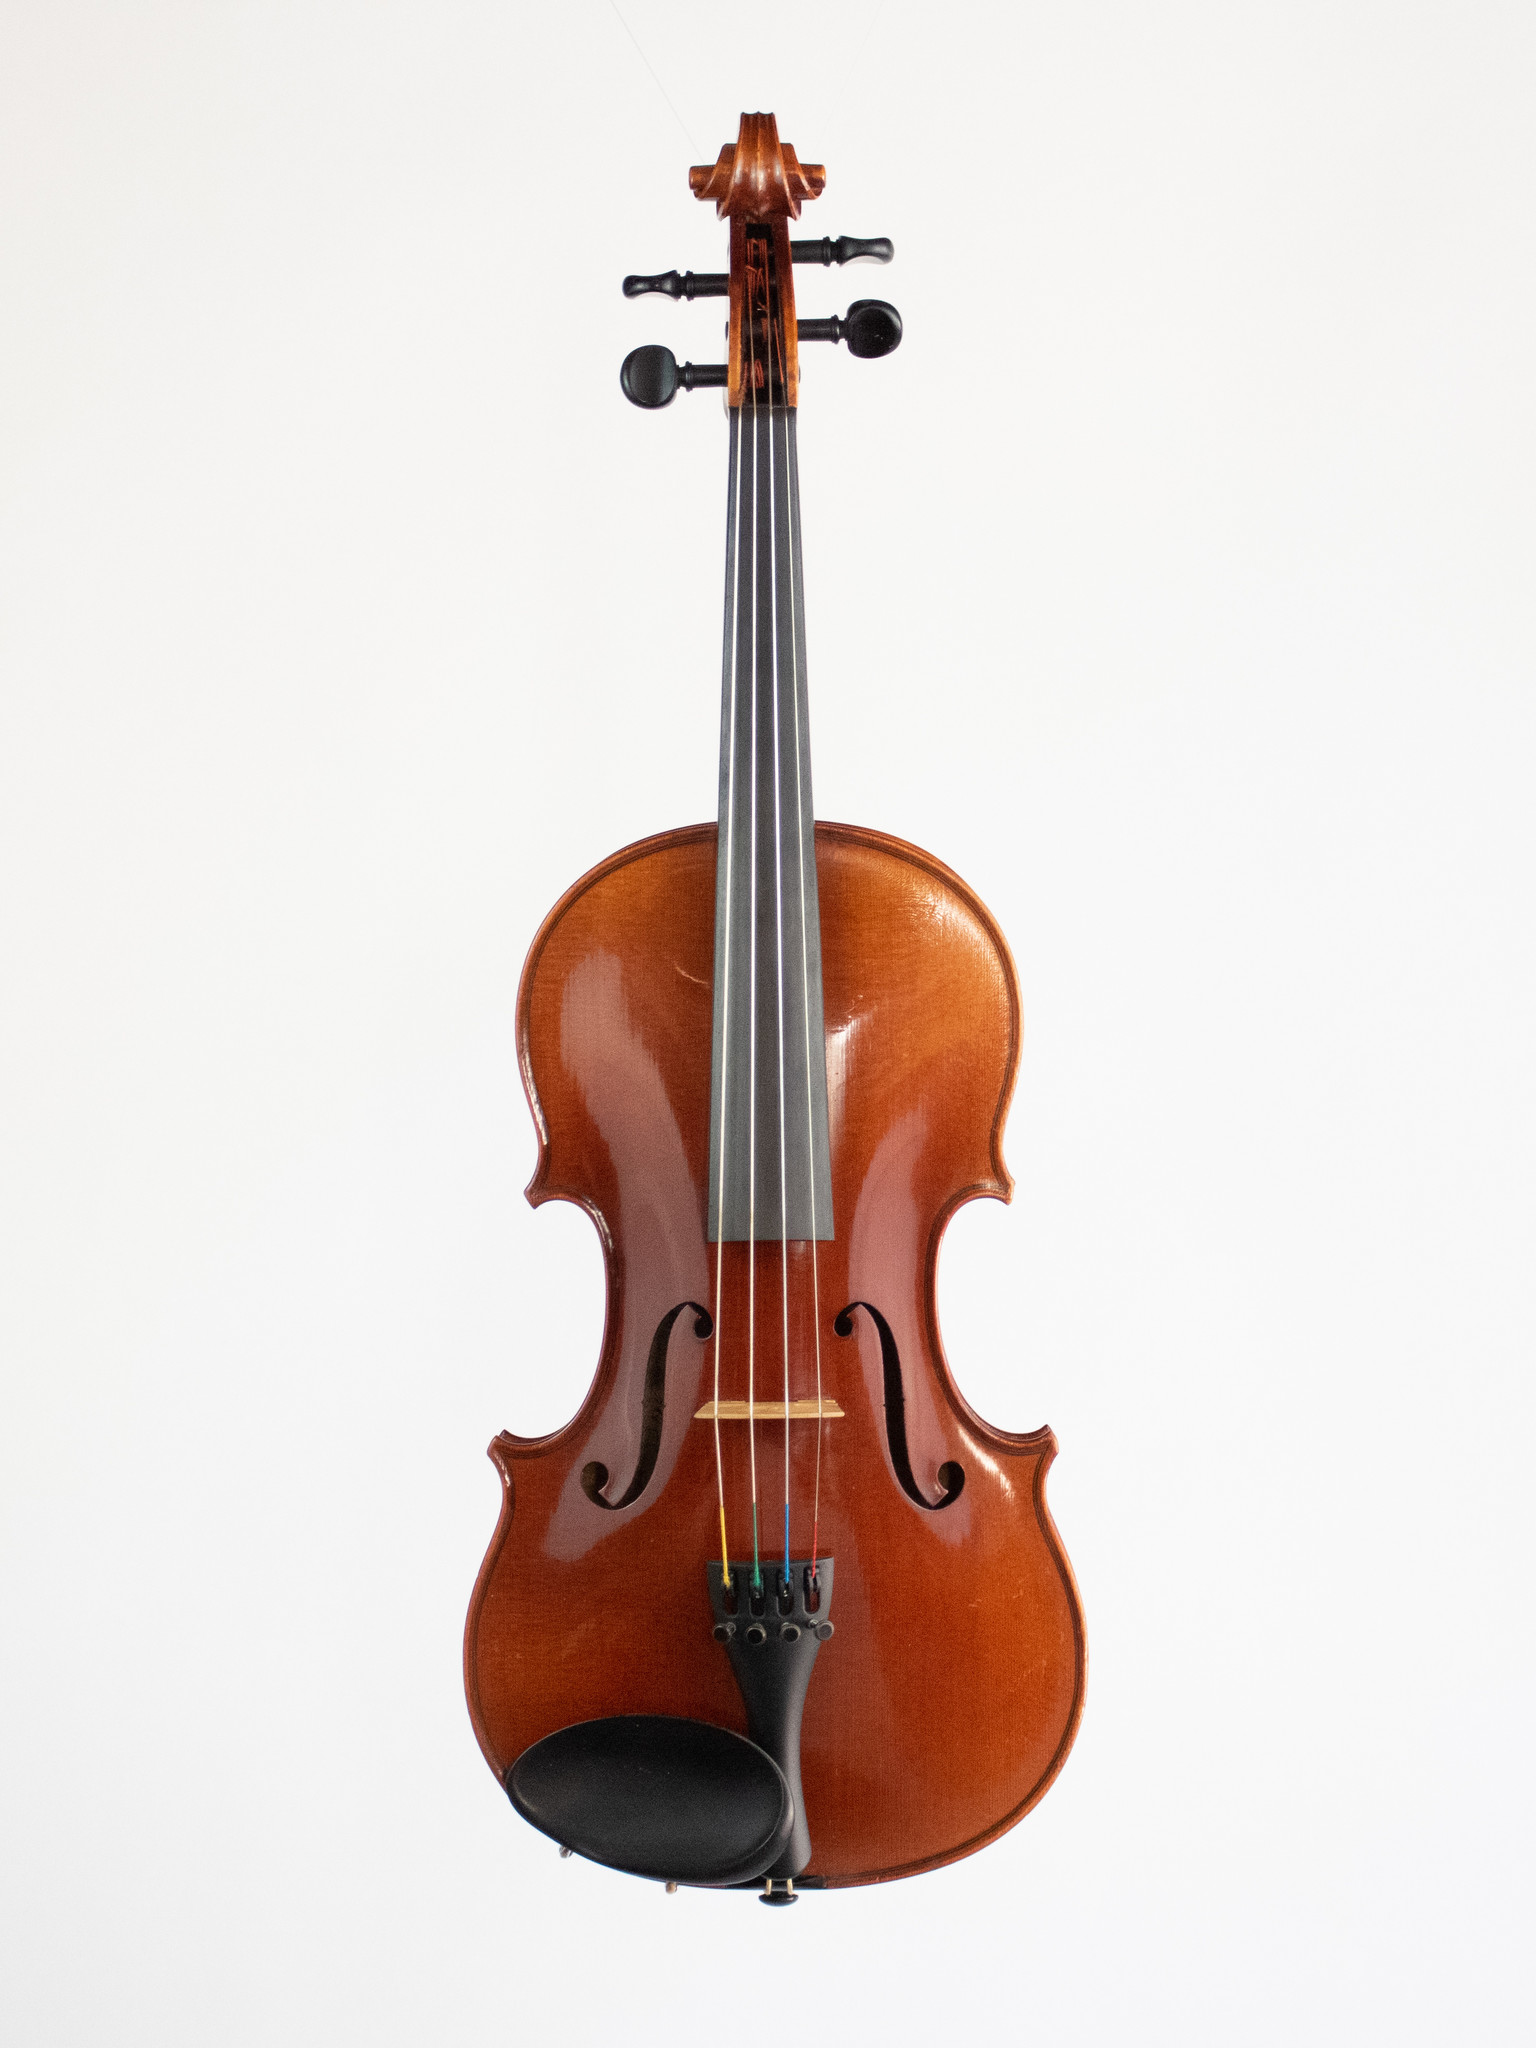 Oskar Meinel 1936 violin, Strad 1714 model 12, Markneukirchen, GERMANY